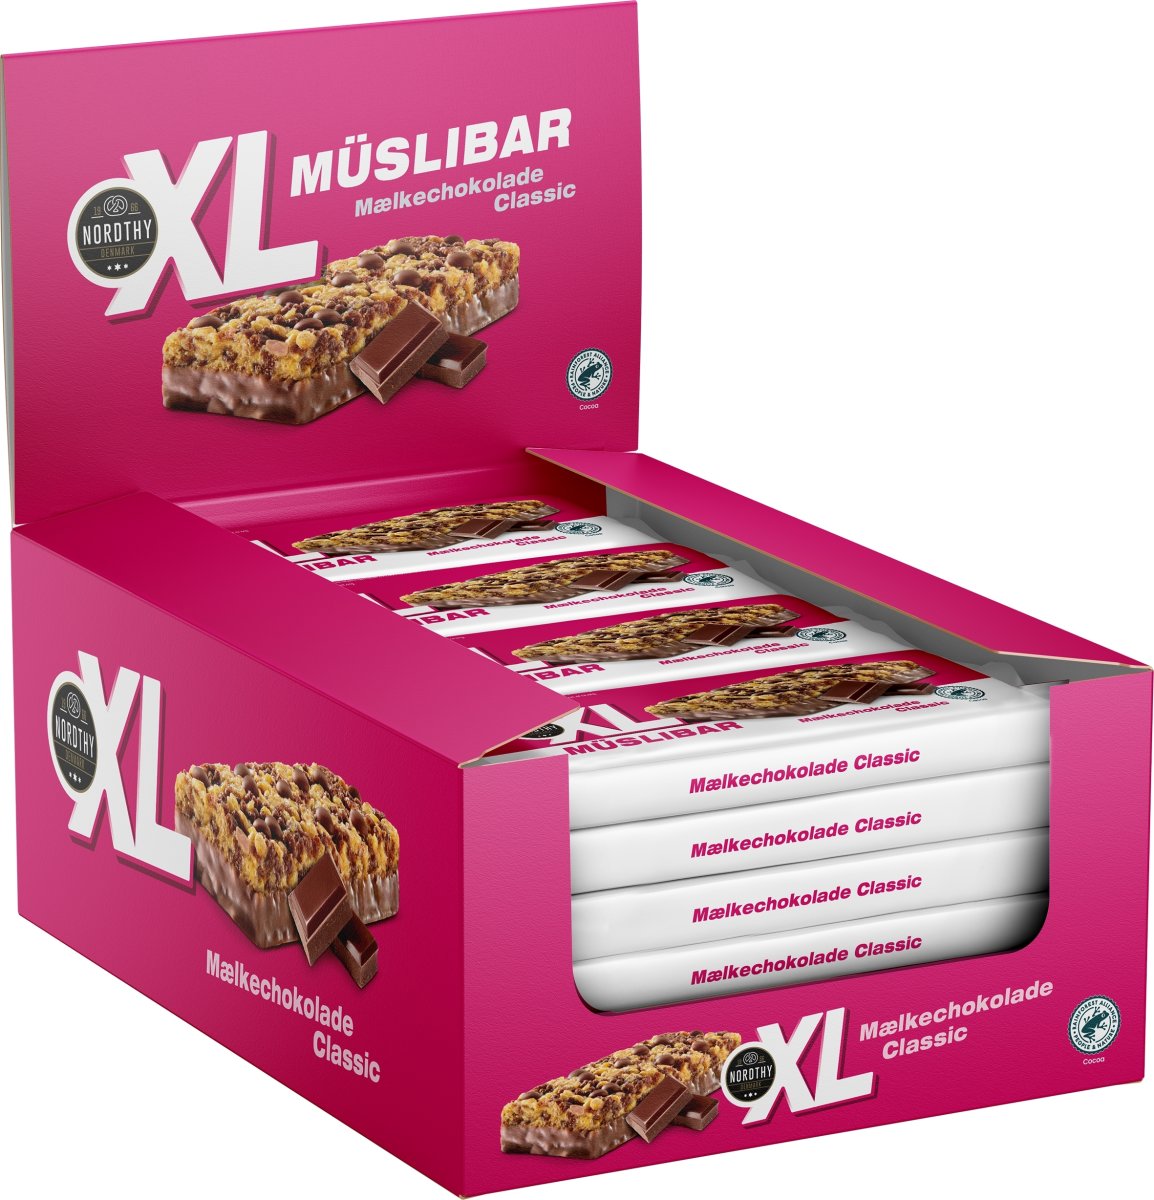 Nordthy XL Müsli Bar Classic Mælkechokolade 50 g